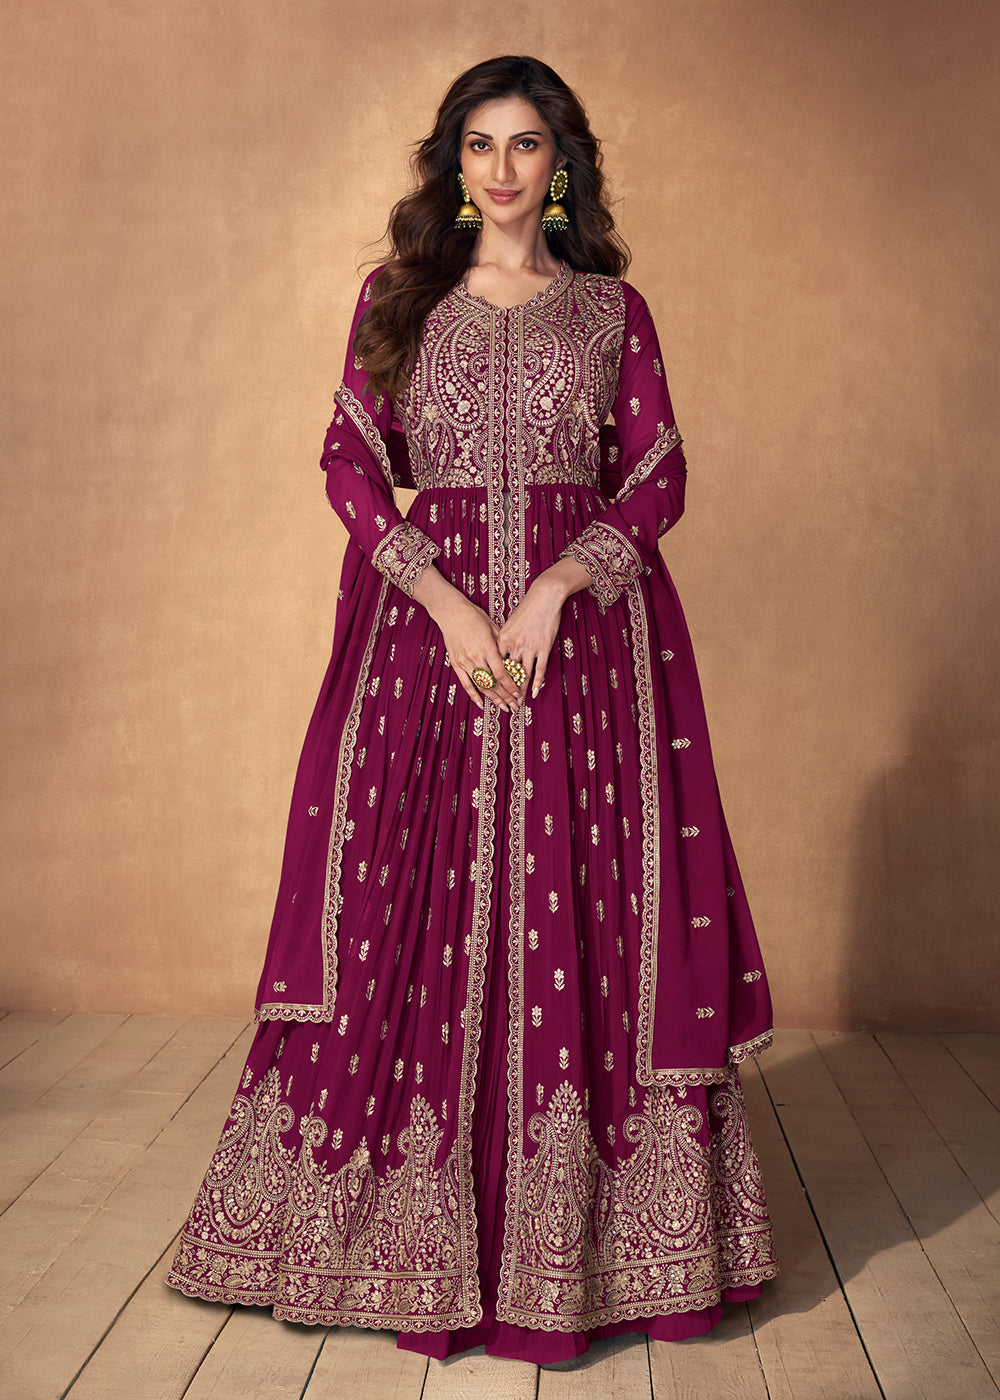 Buy Now Lehenga Style Magenta Wedding Wear Anarkali Suit Online in USA, UK, Australia, New Zealand, Canada & Worldwide at Empress Clothing